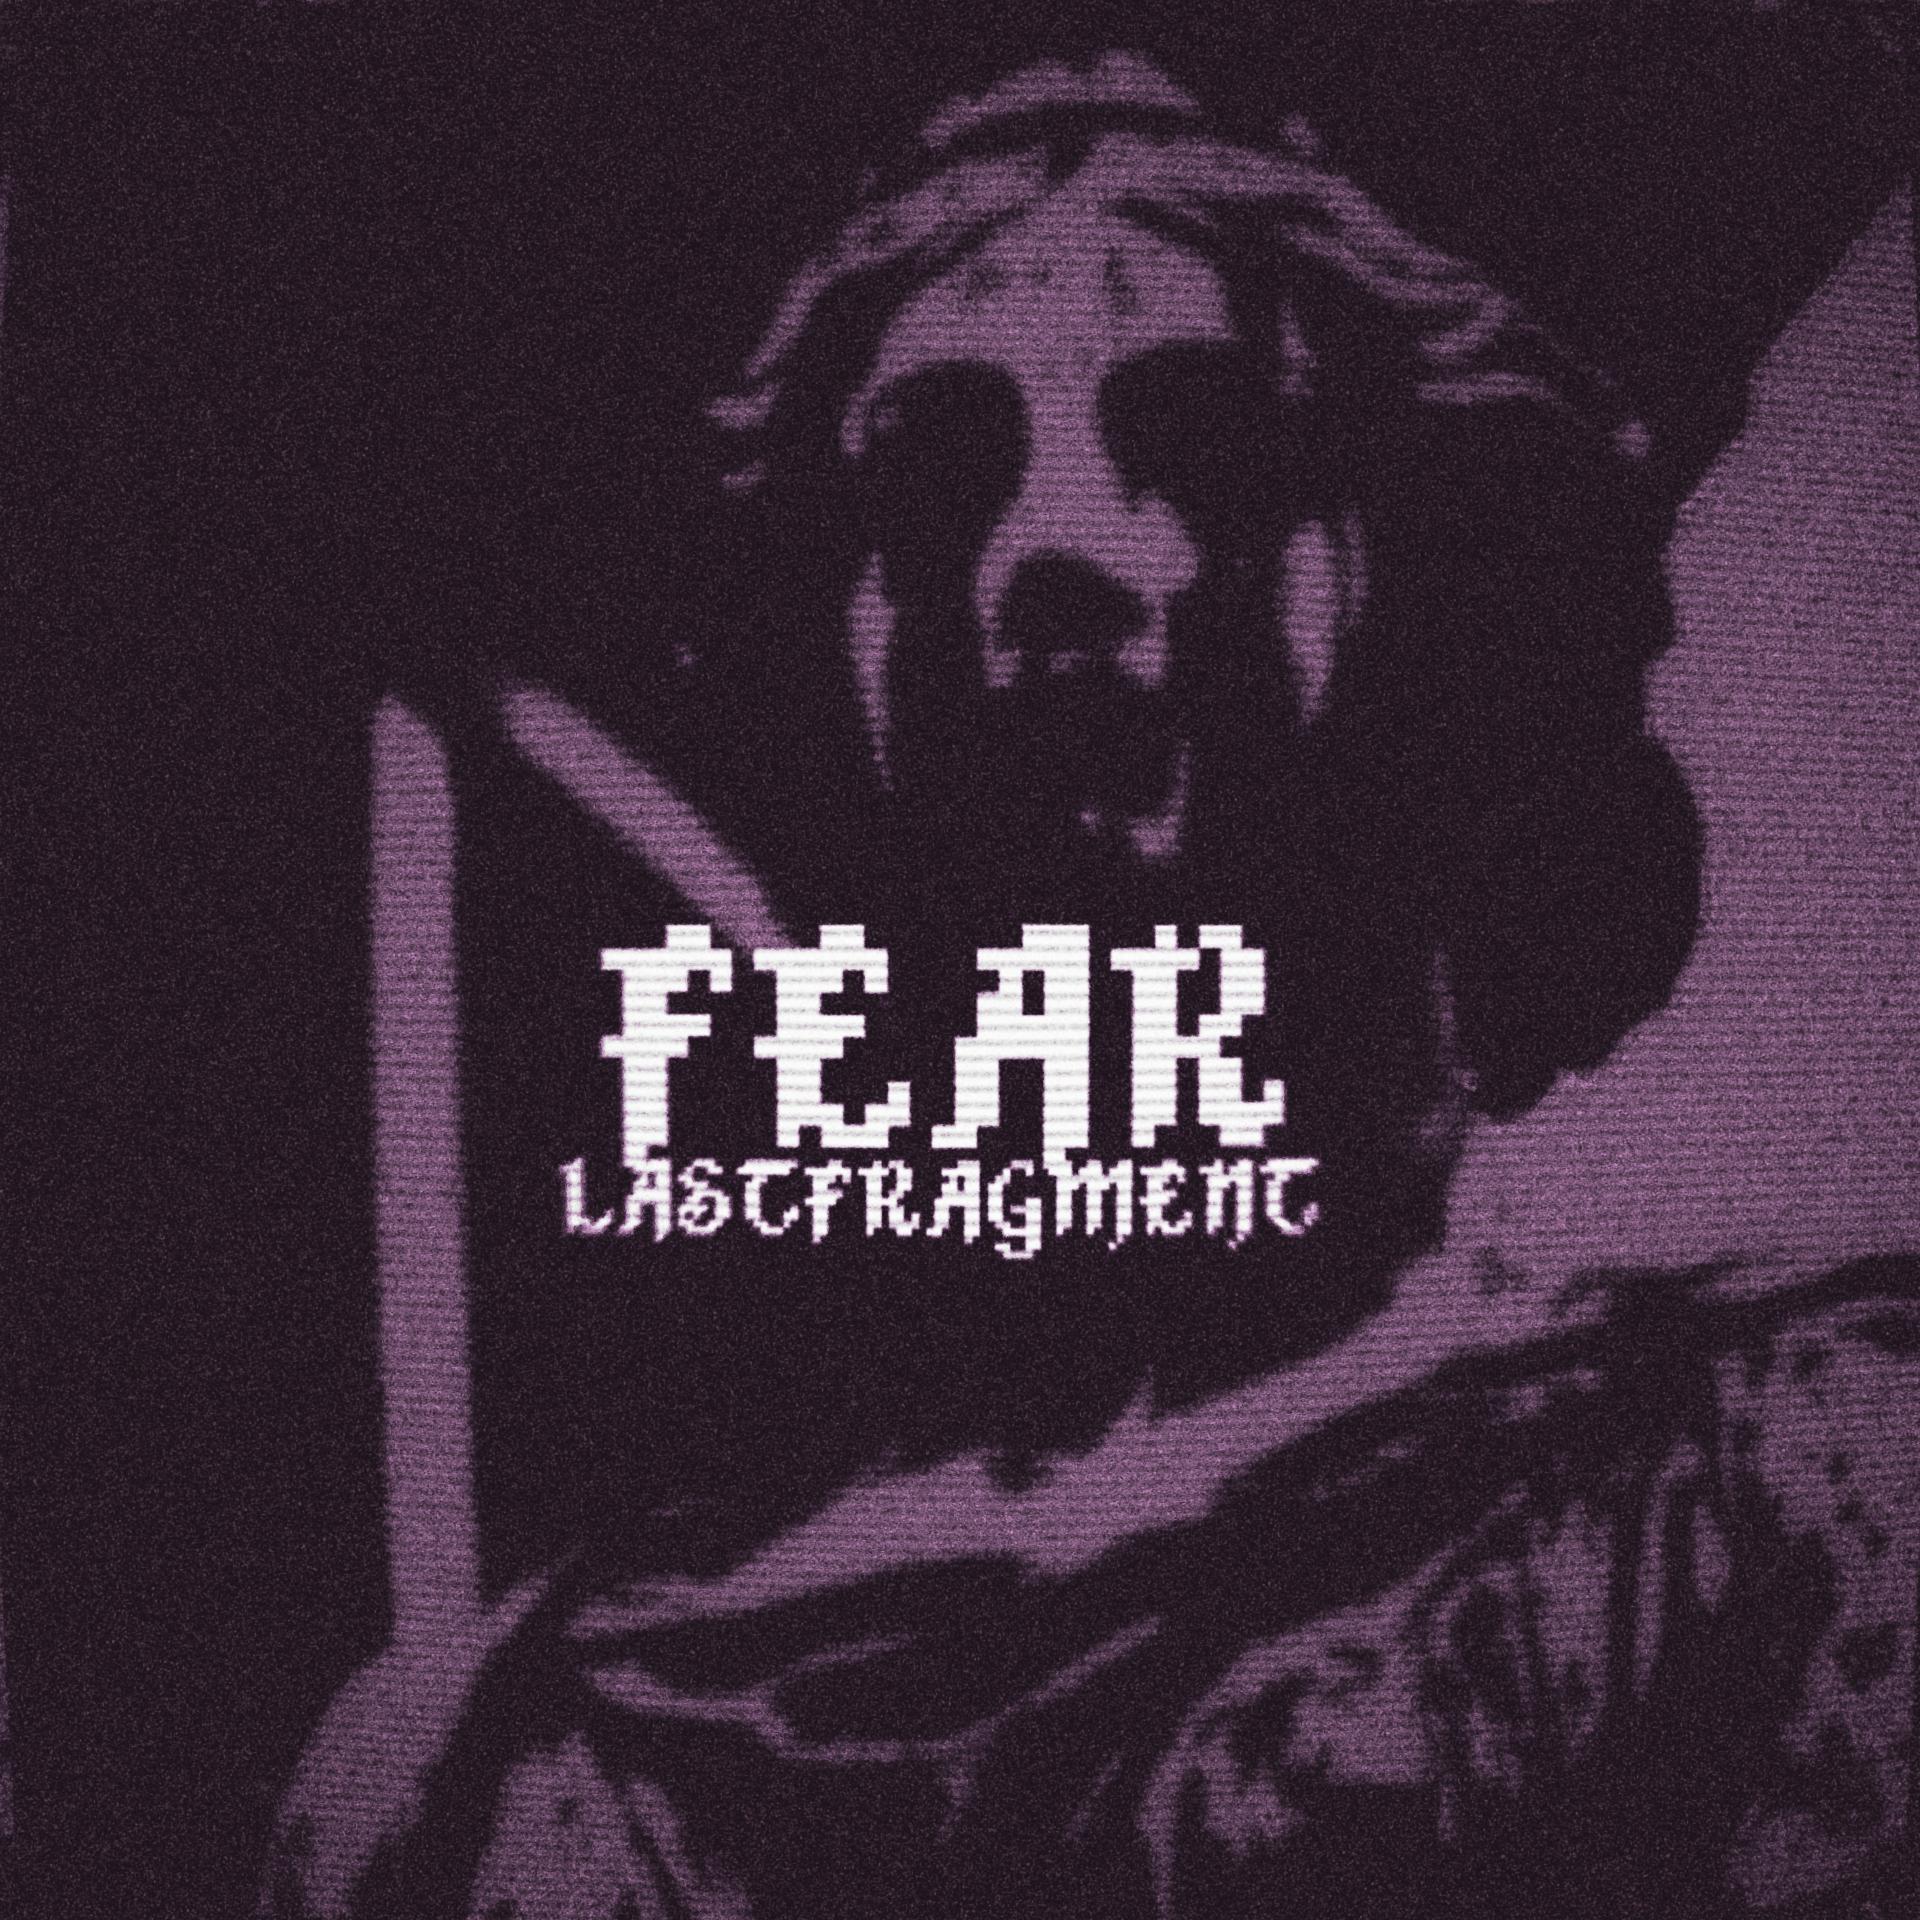 Постер к треку Lastfragment - Fear